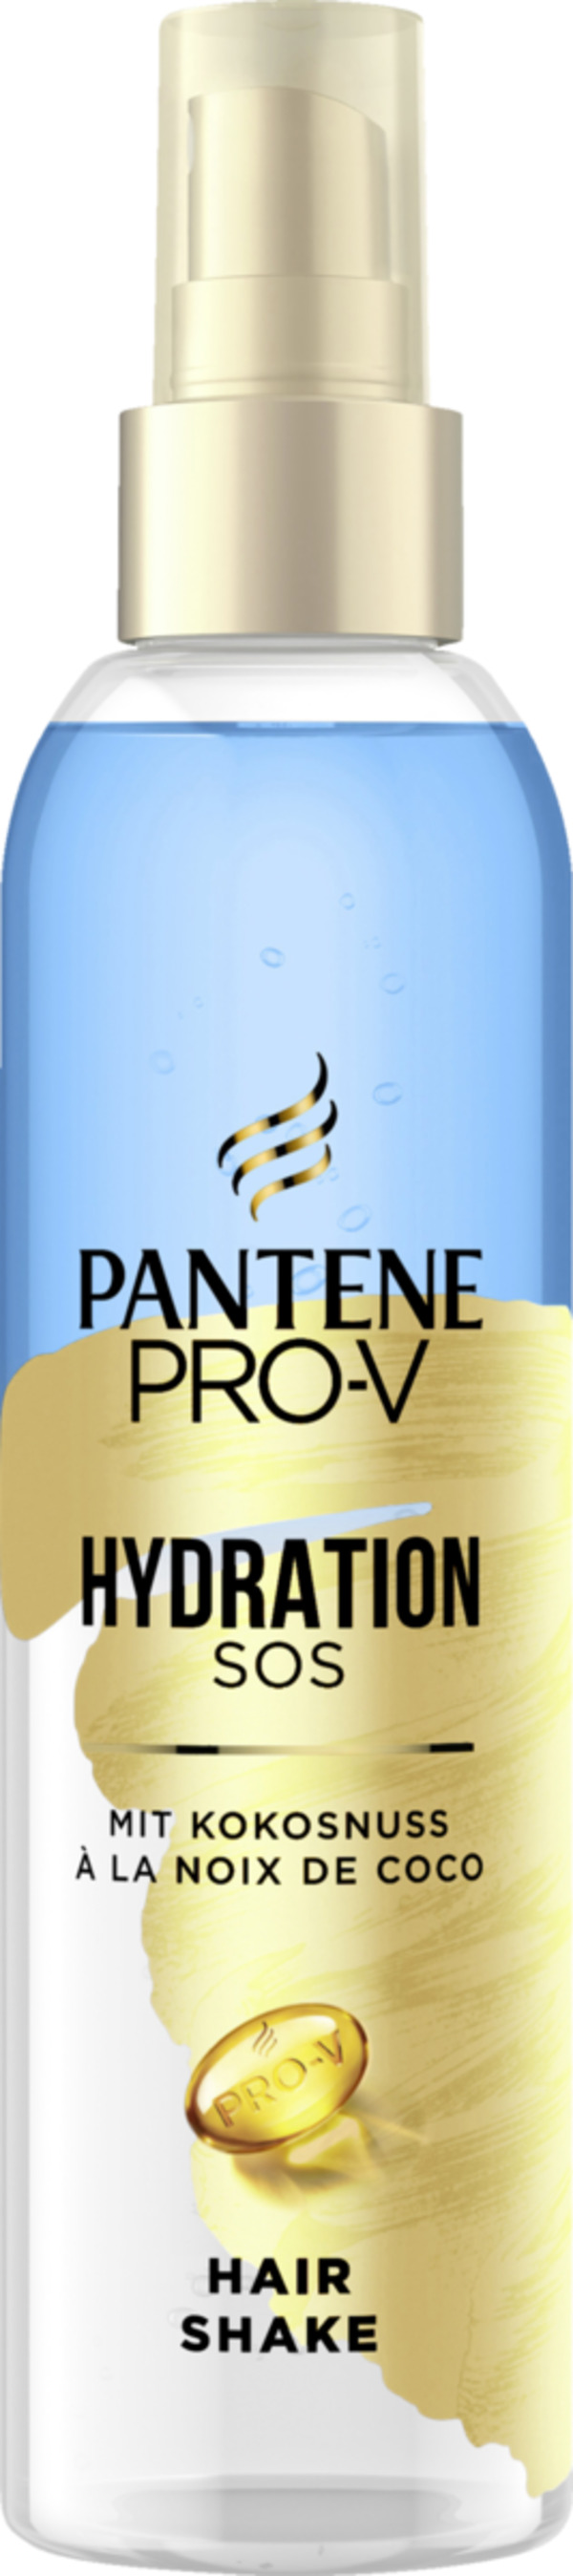 Bild 1 von Pantene Pro-V Hydration SOS Hair Shake